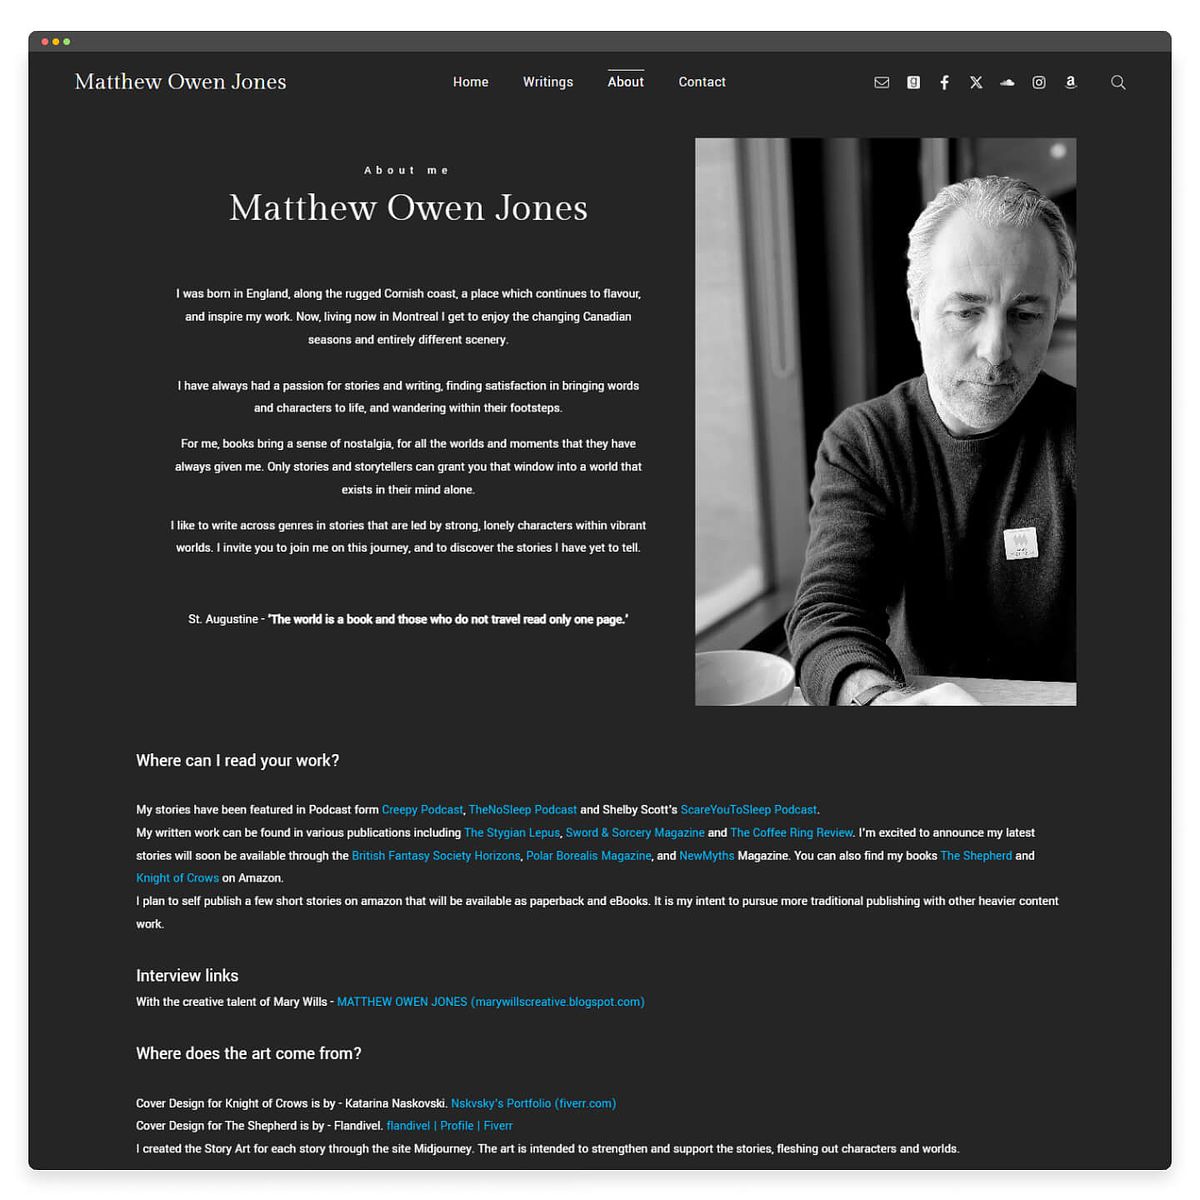 Mathew Owen Jones author bio page